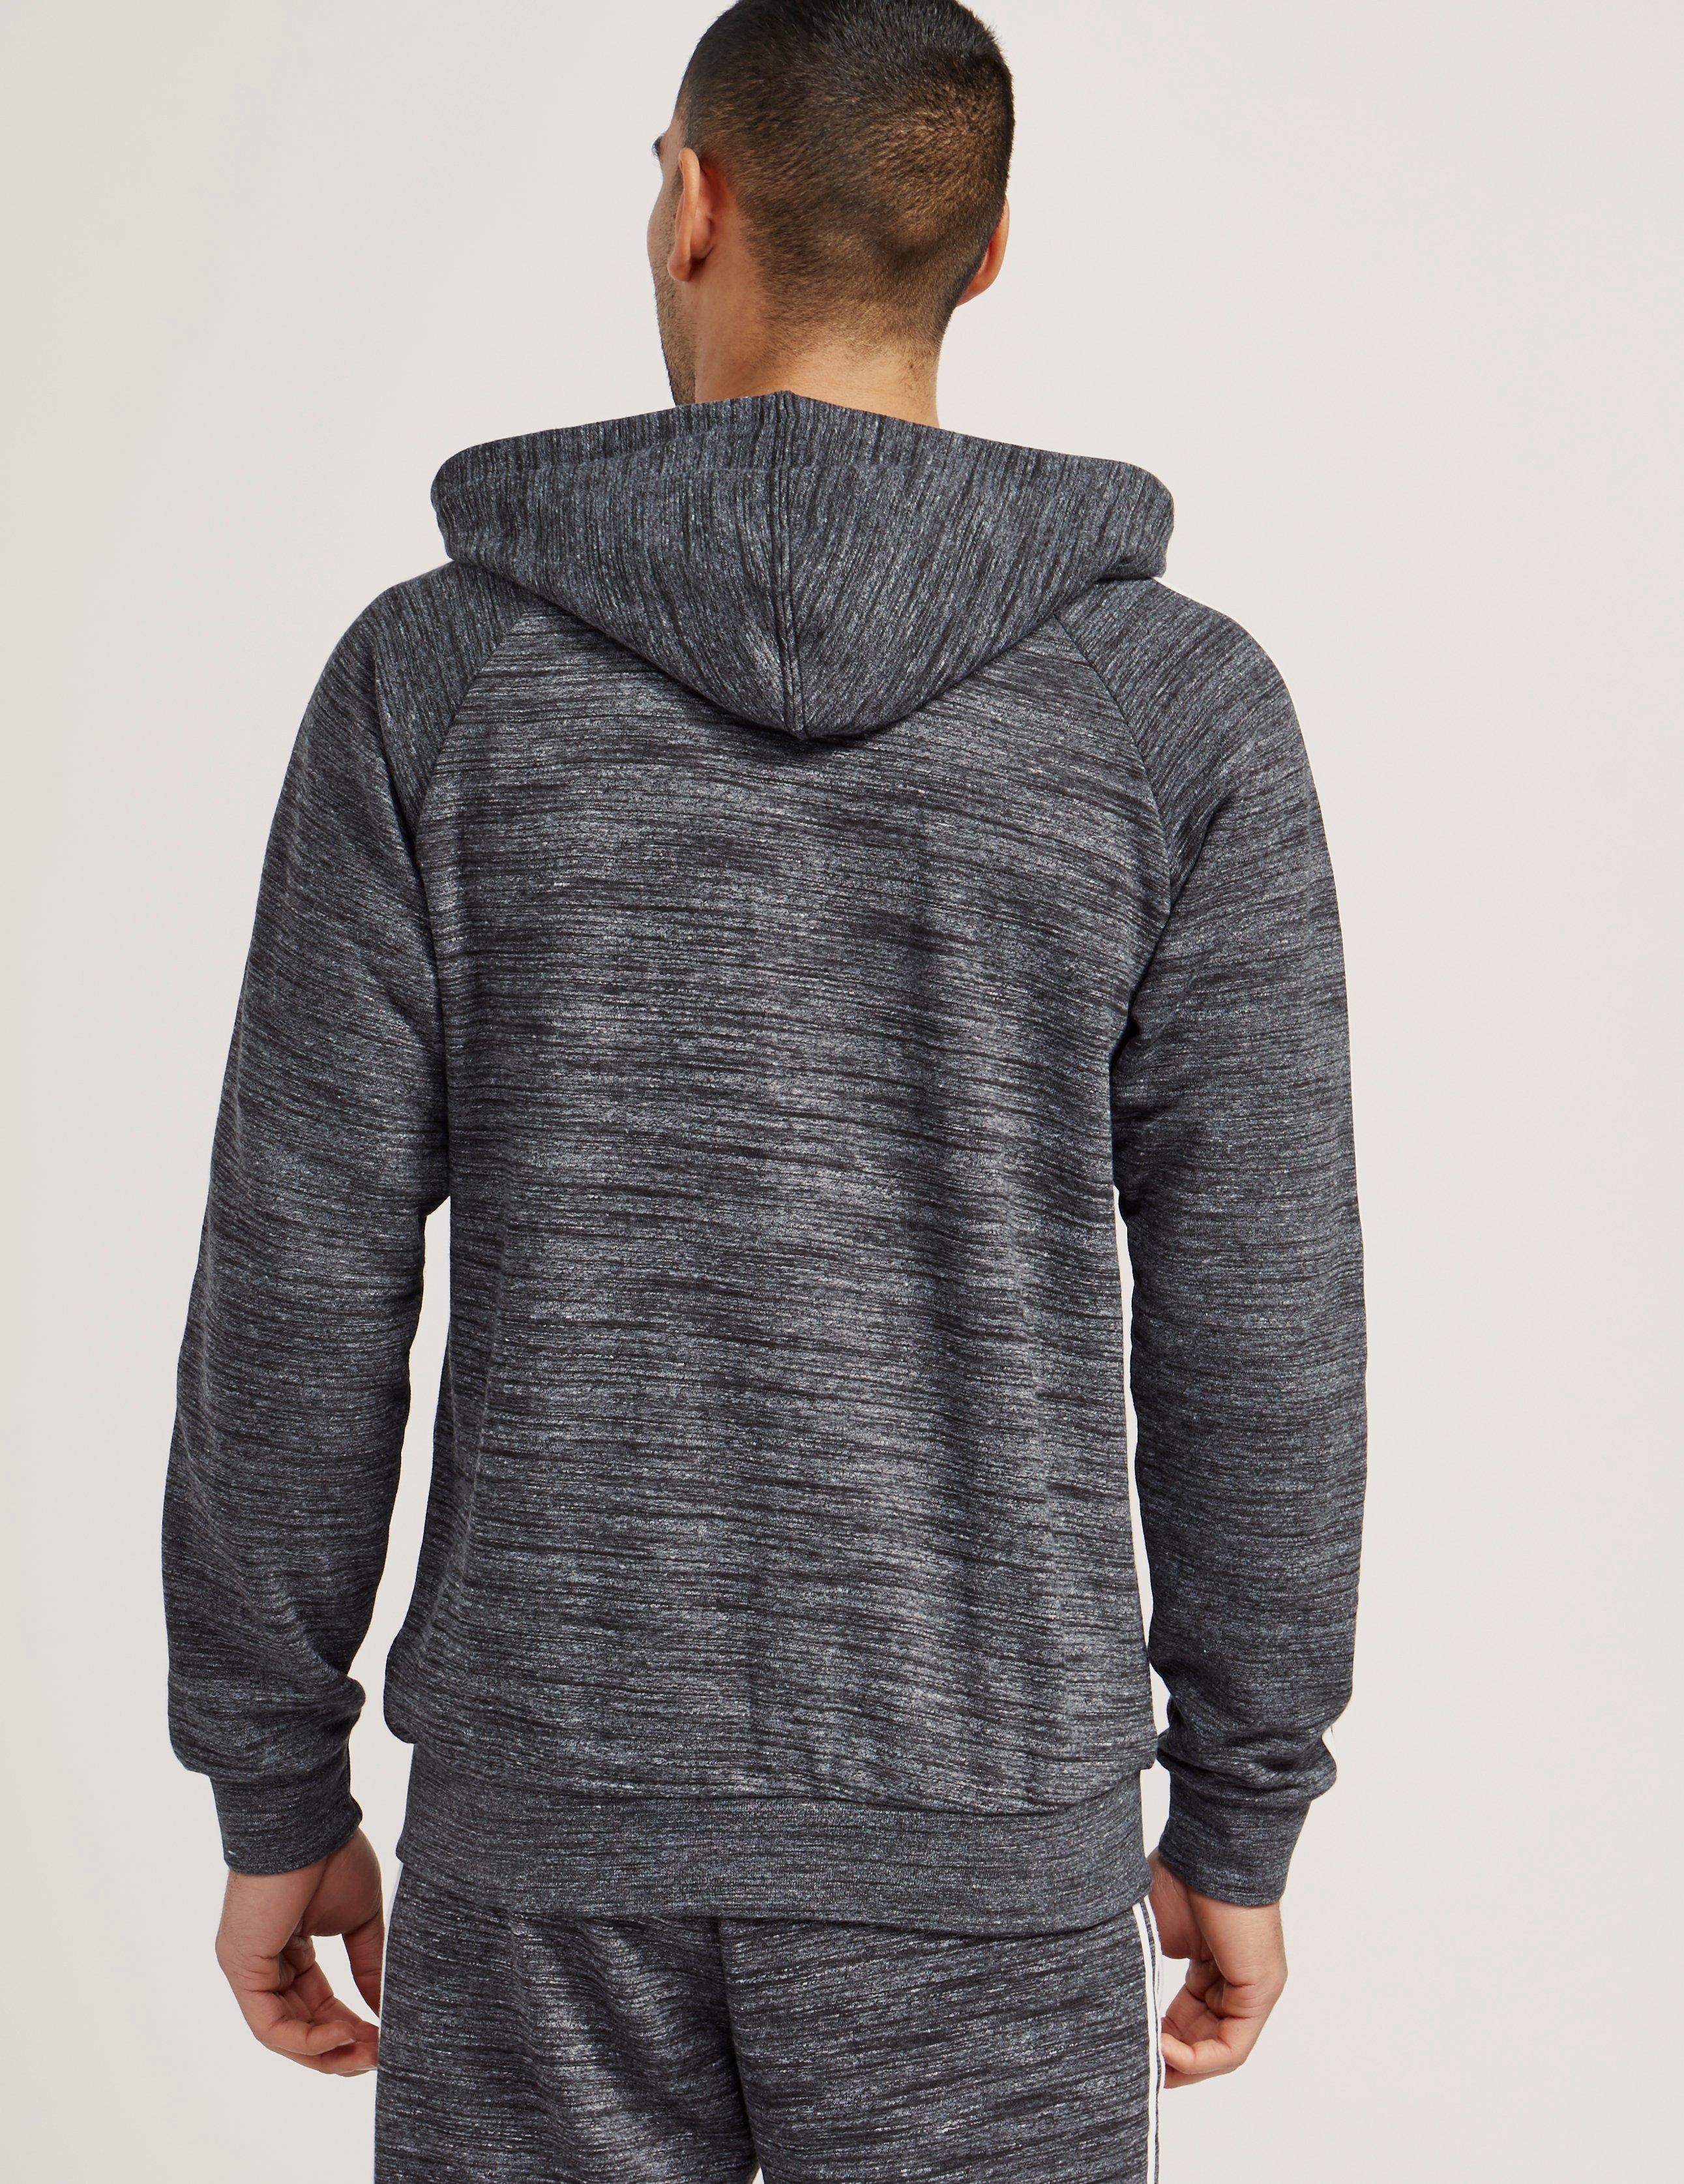 adidas Originals Cotton California Full Zip Hoody in Grey (Grey) for